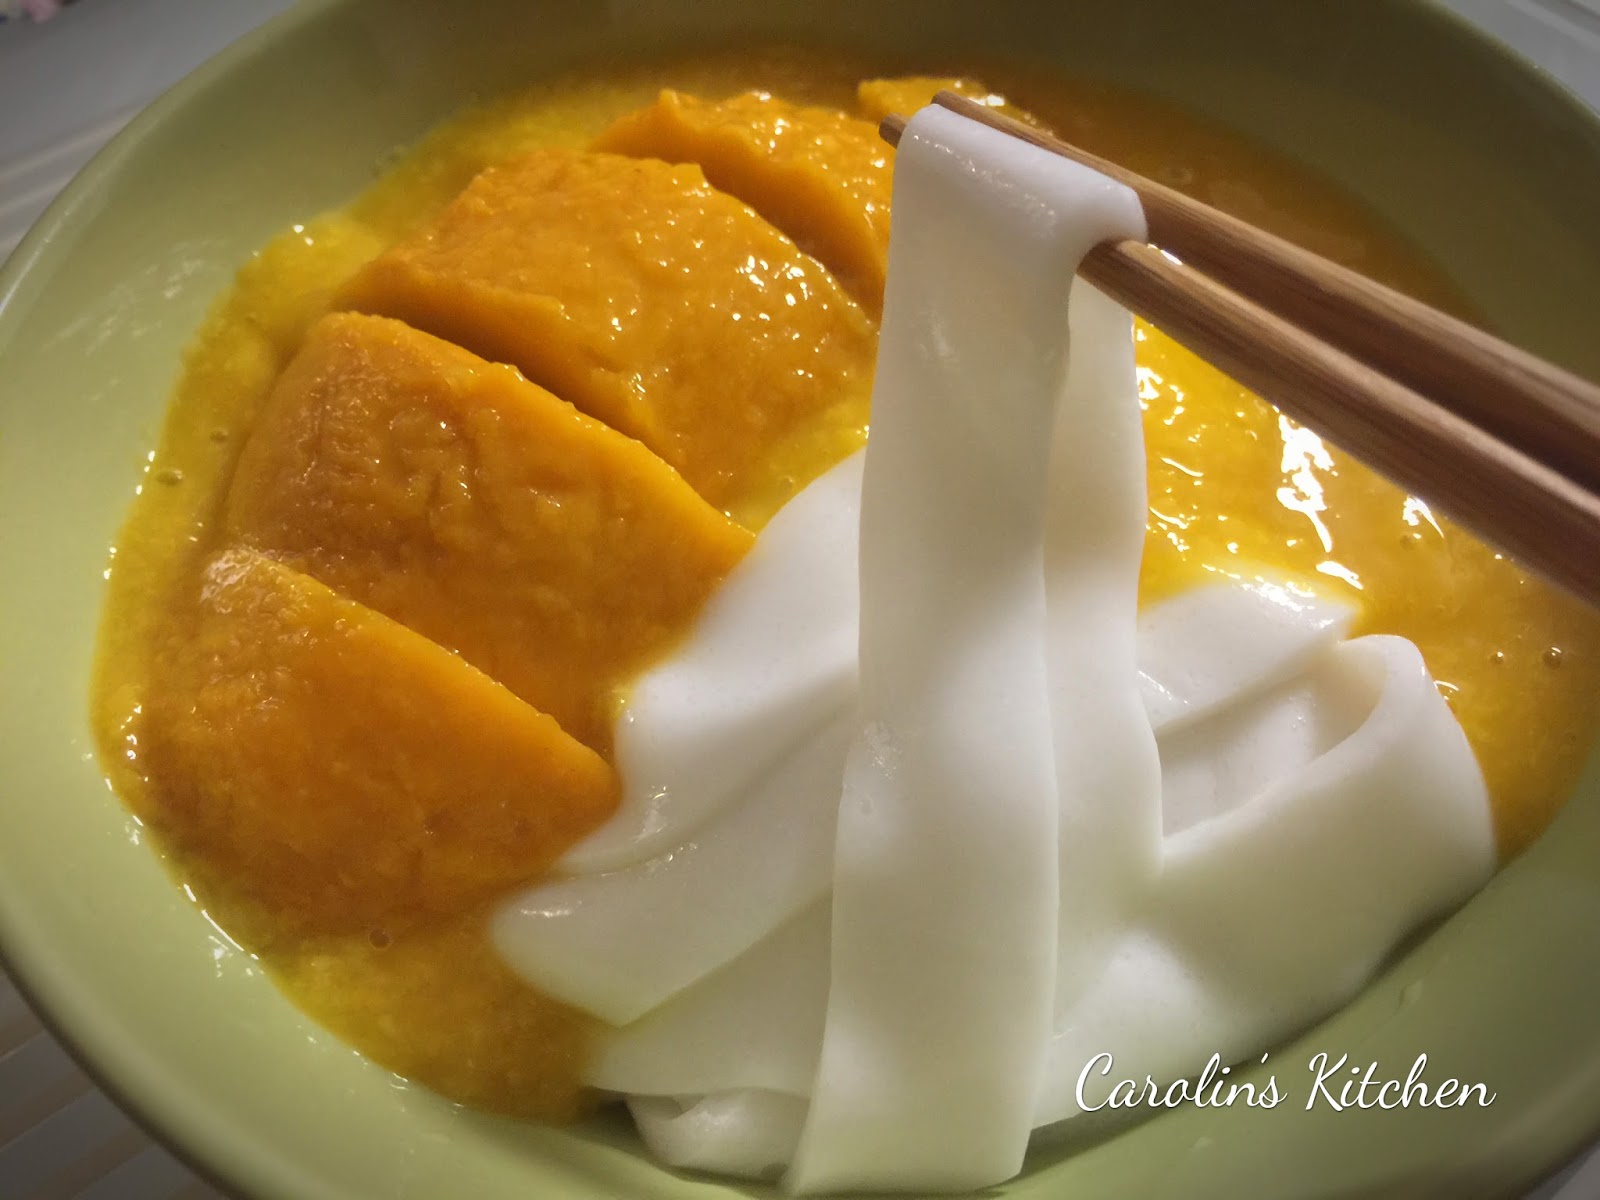 Violet's Kitchen ~♥紫羅蘭的爱心厨房♥~ : 芒果捞河 Konnyaku Noodles in Mango Puree